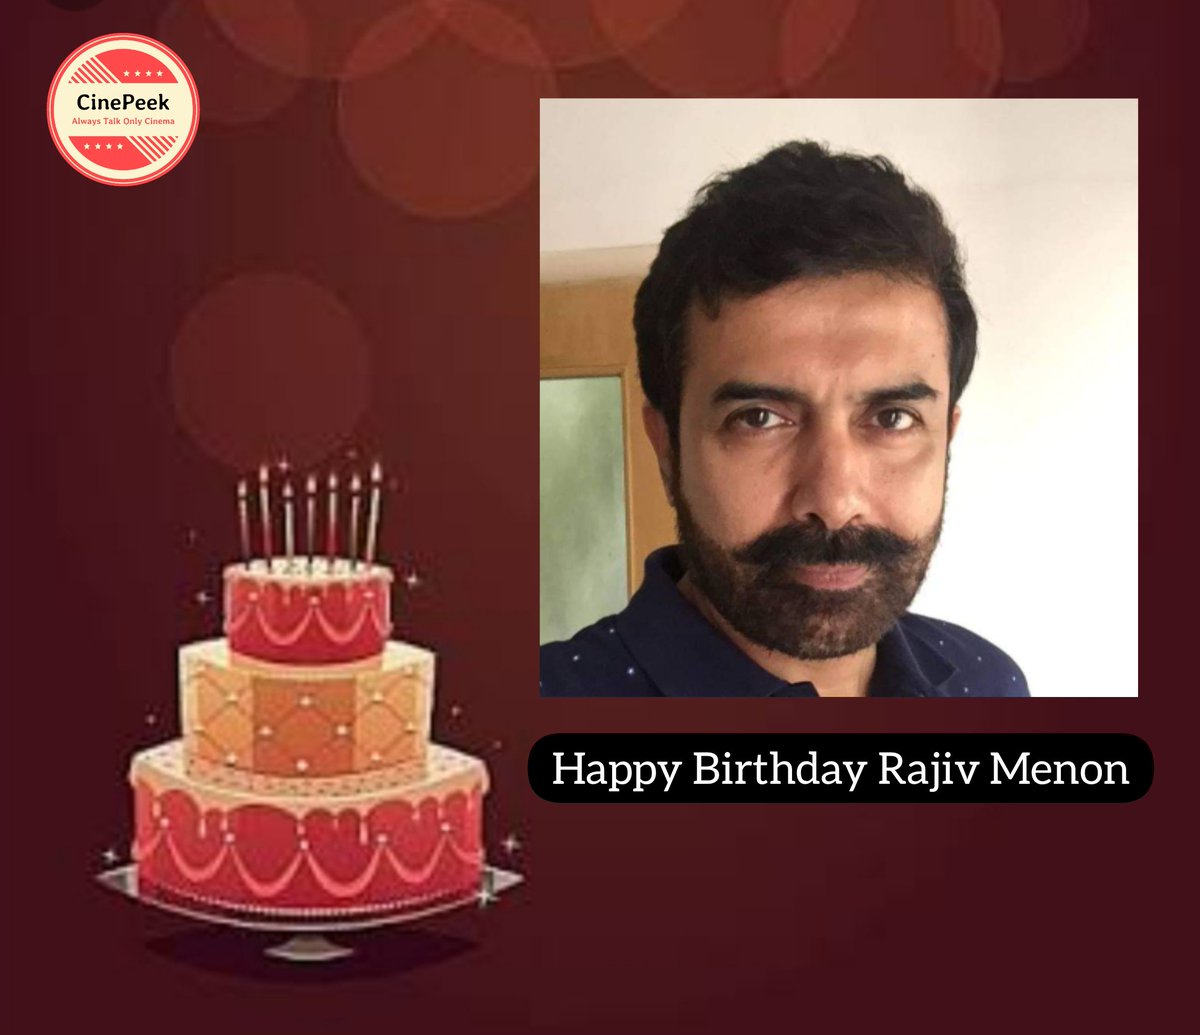 Happy Birthday EverGreen Director Mr. #RajivMenon Sir...! 🎂 💐 

#HBDRajivMenon  #HappyBirthdayRajivMenon @DirRajivMenon #CinePeek